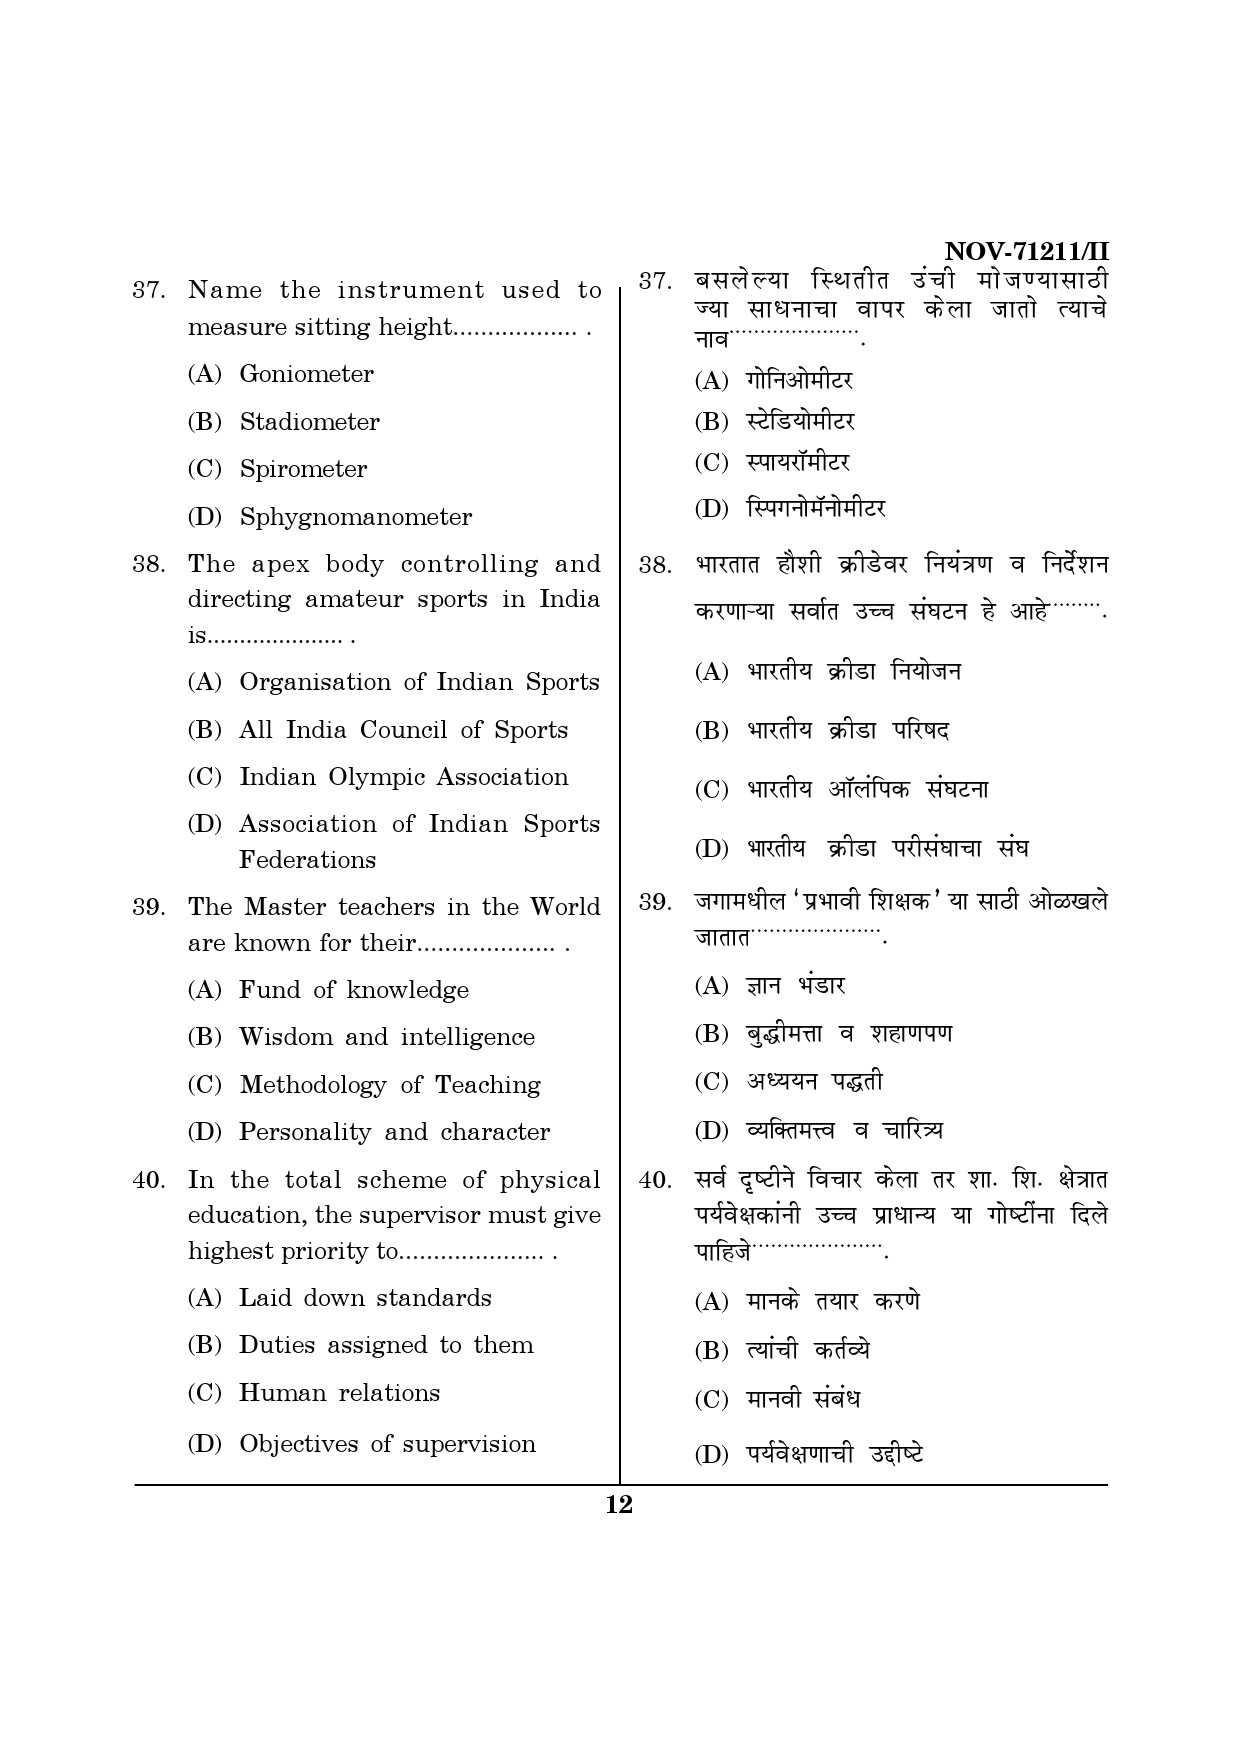 Maharashtra SET Physical Education Question Paper II November 2011 12